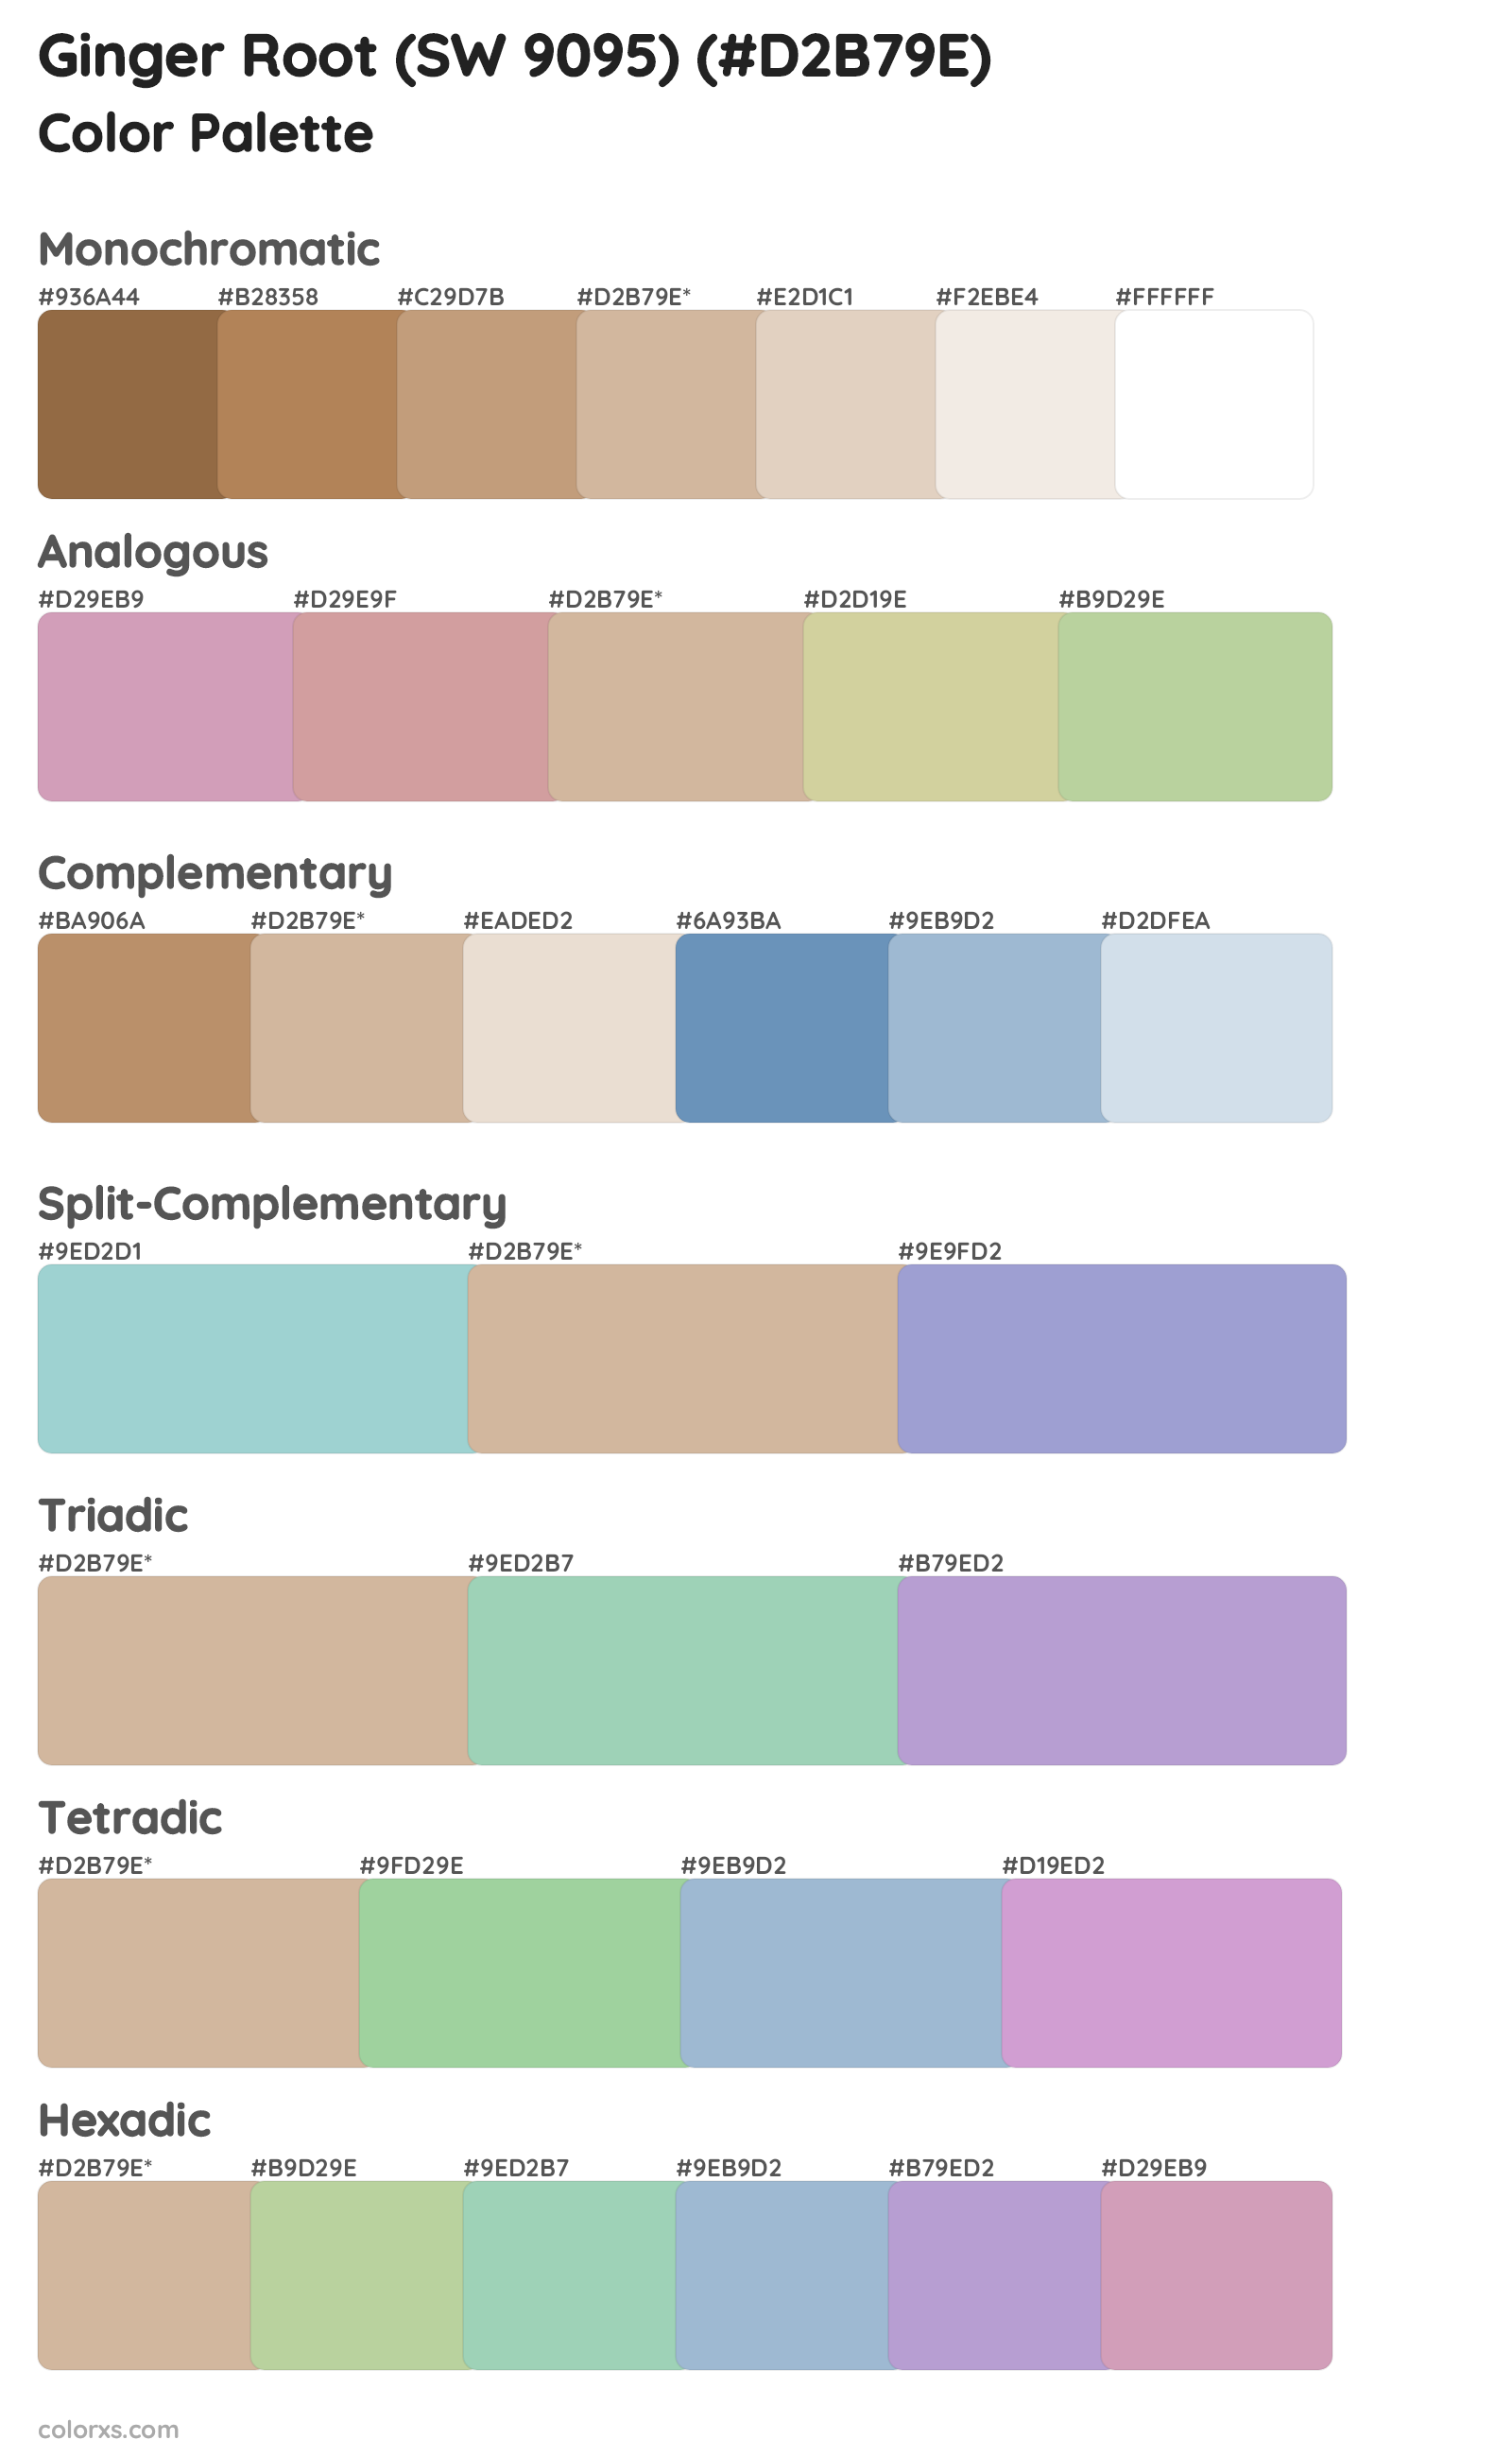 Ginger Root (SW 9095) Color Scheme Palettes